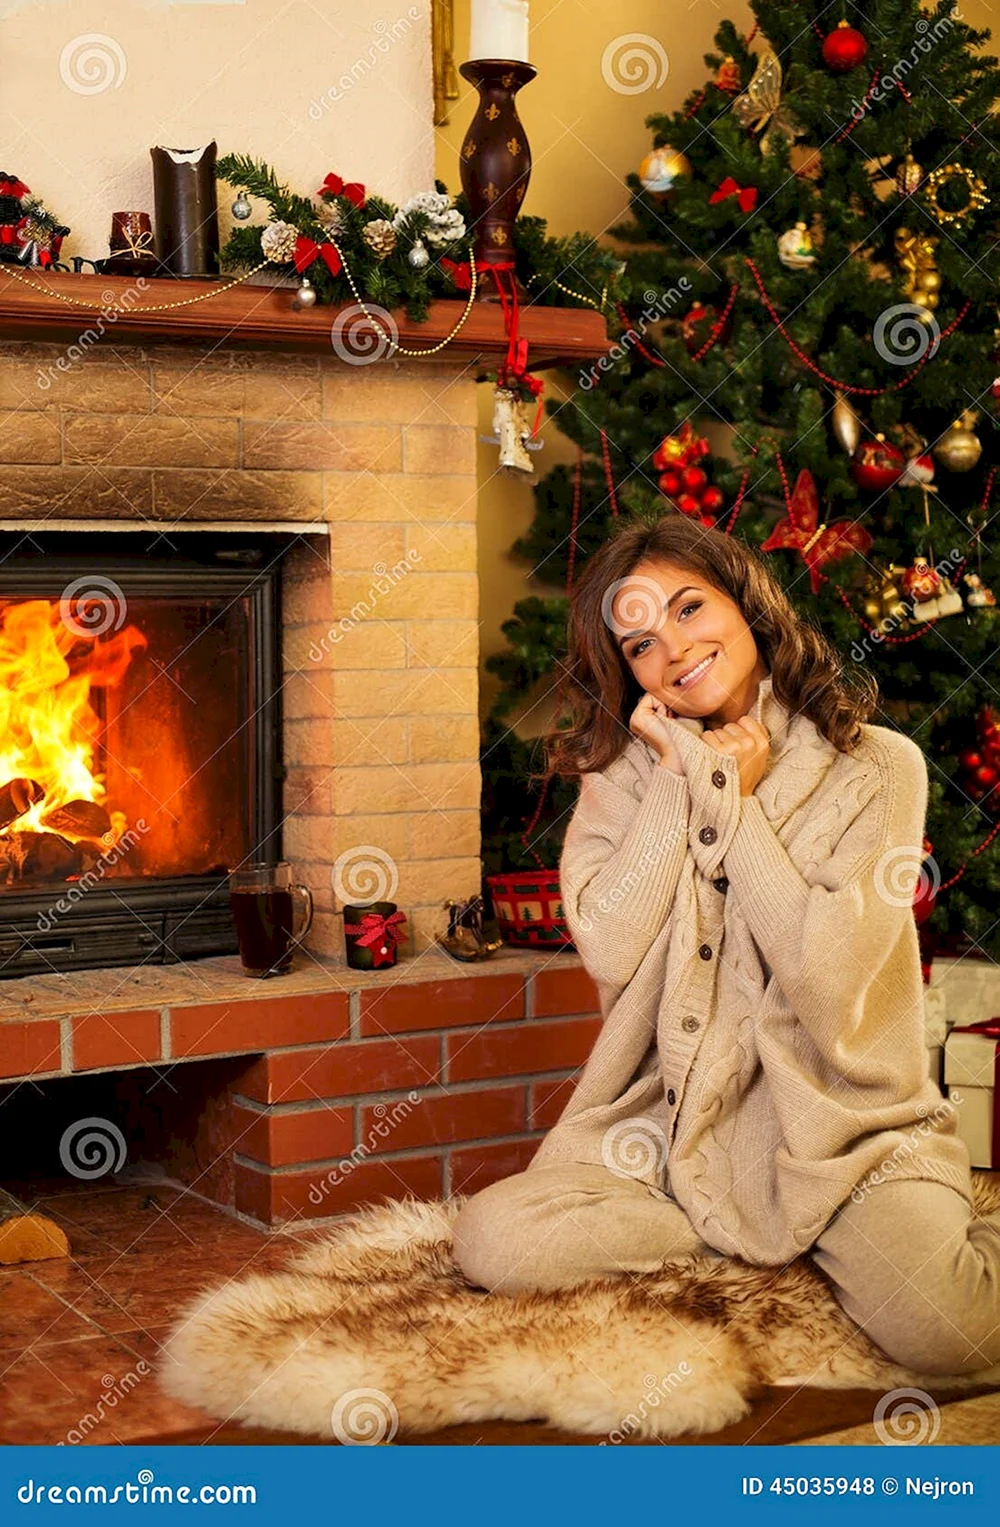 Woman near Oven Christmas